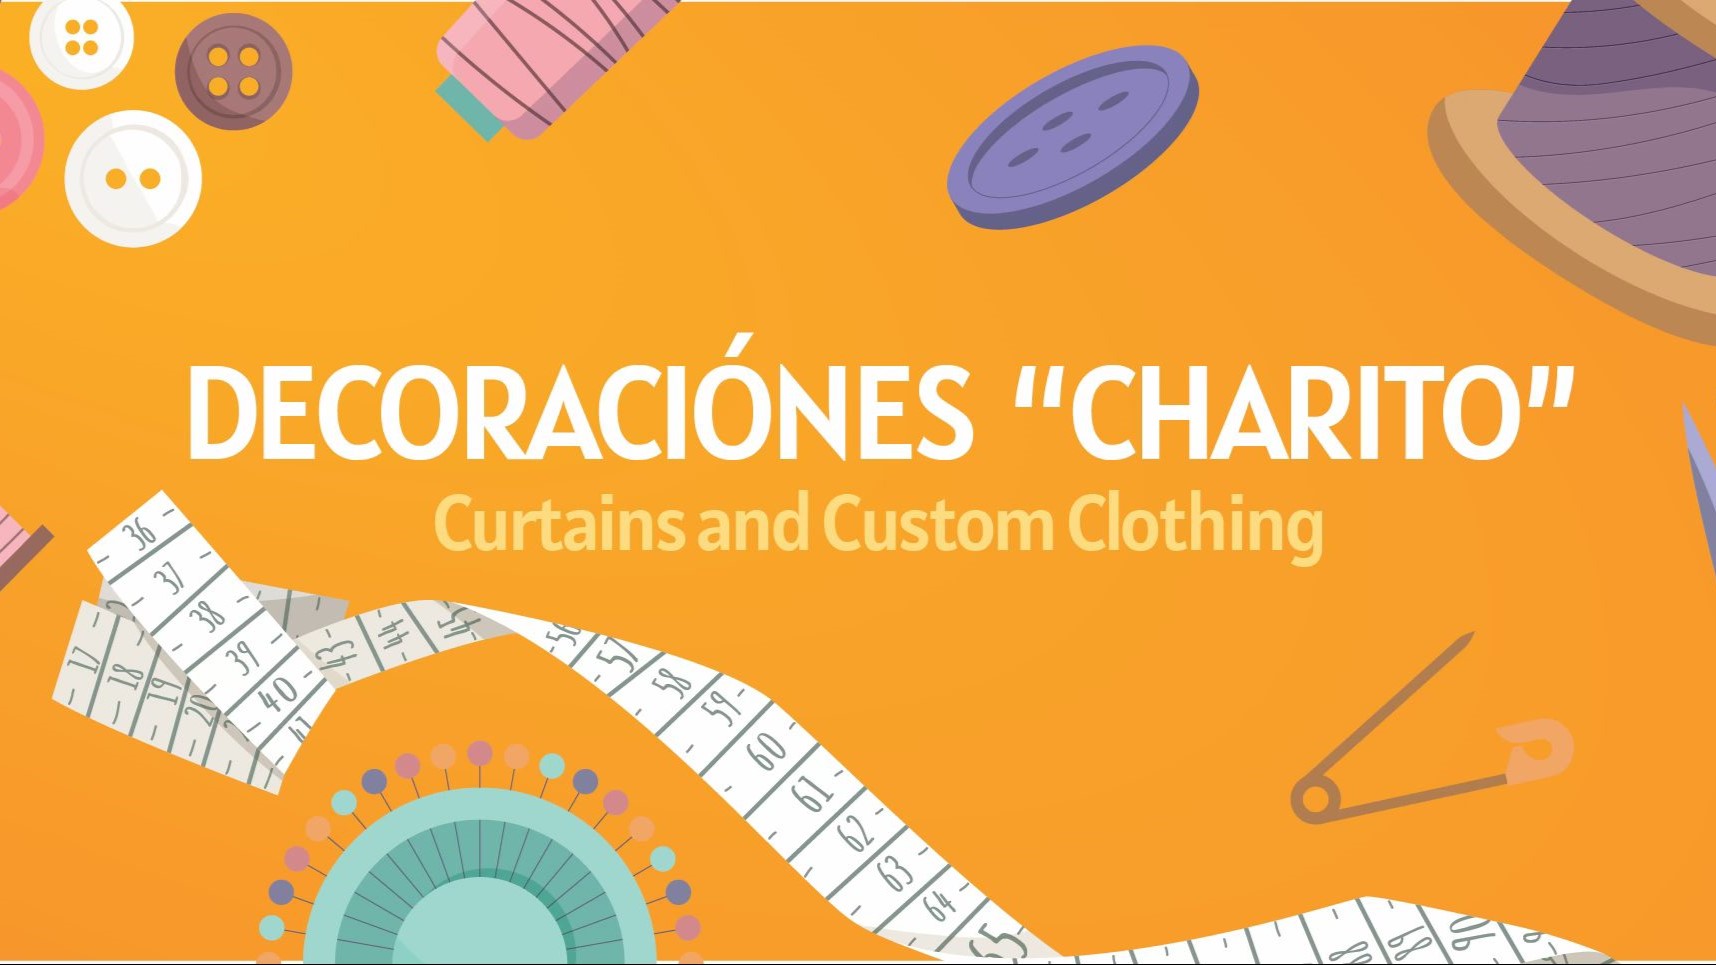 Decoraciones Charito: Curtains and Custom Clothing